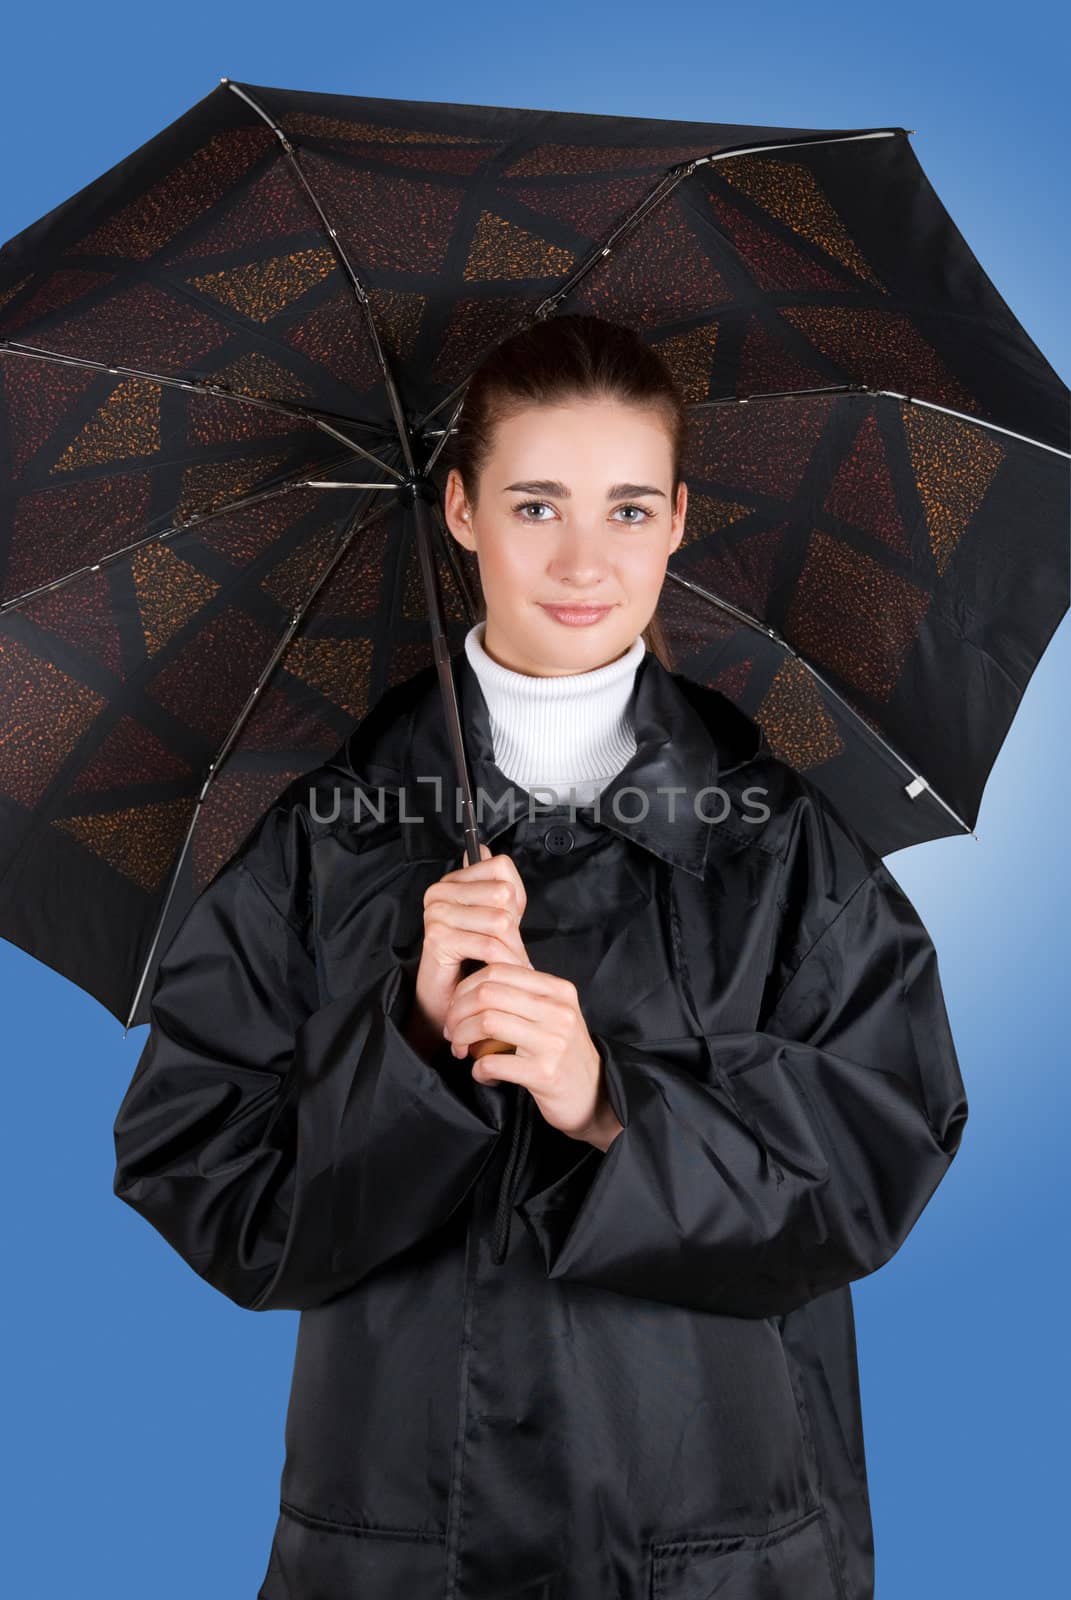 umbrella by rusak